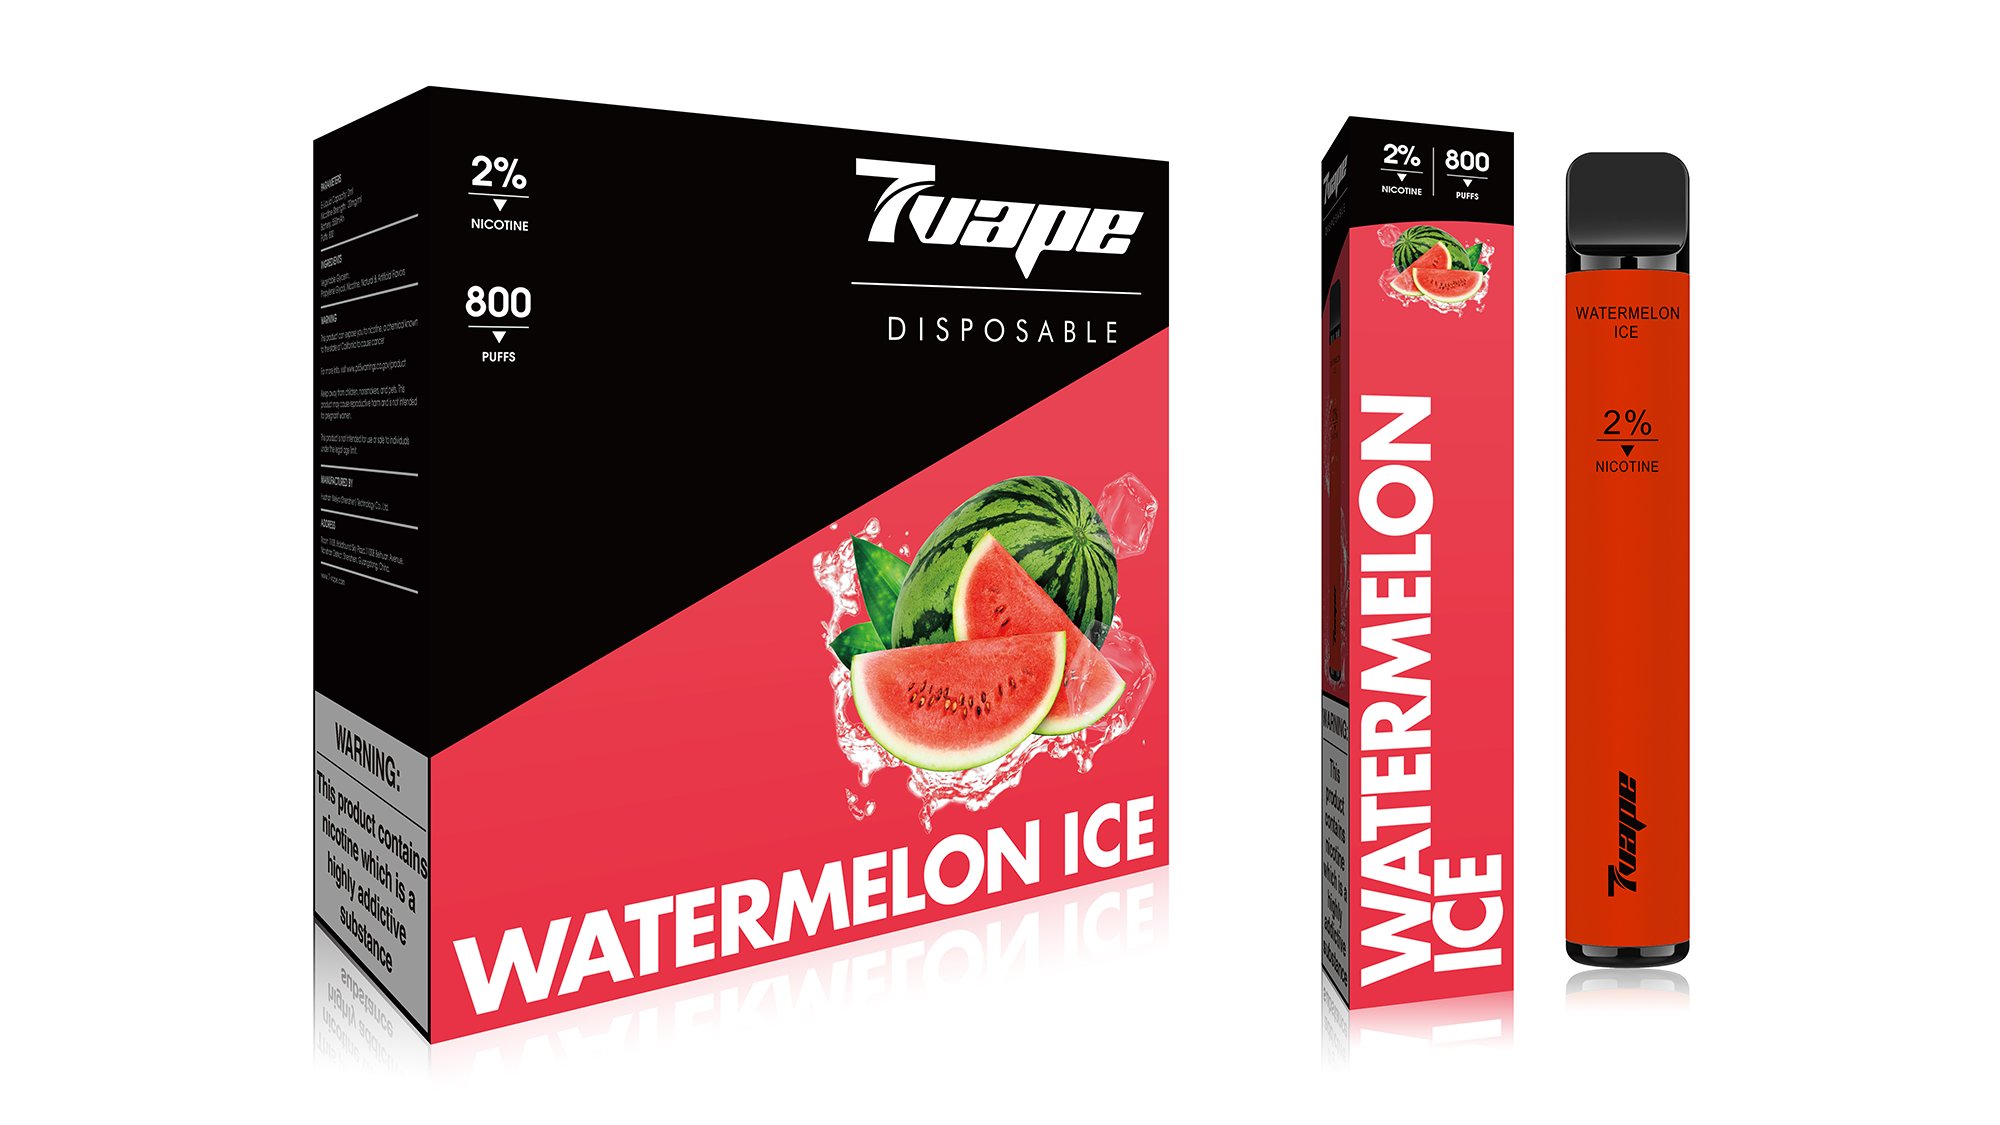 7VAPE disposable vape, watermelon ice vape, 800 puffs, 2% nicotine, 7-VAPE BAR